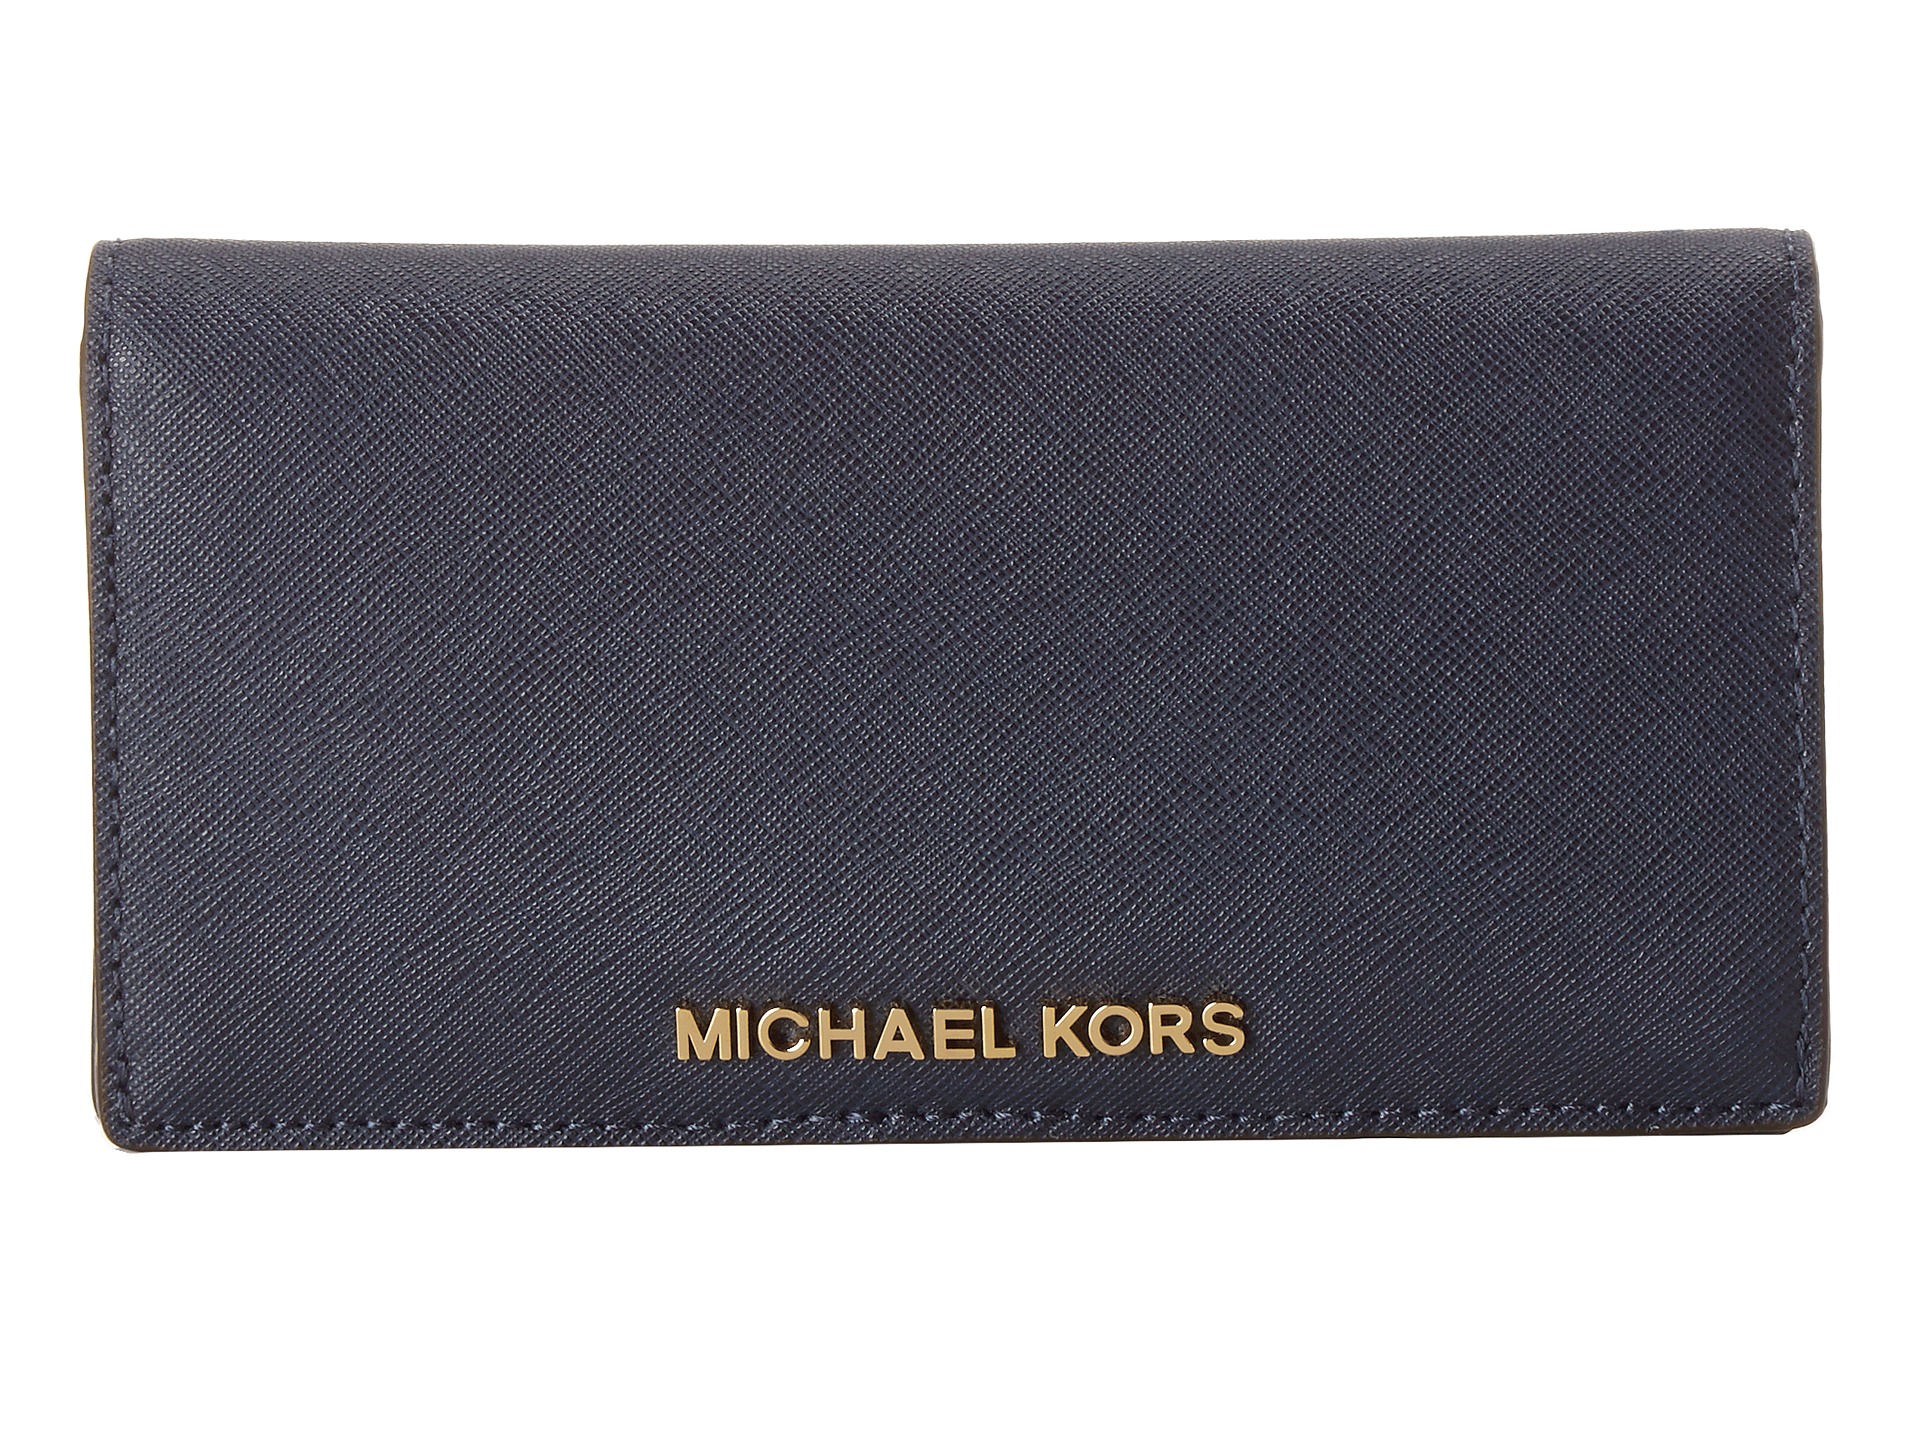 Michael Michael Kors Jet Set Travel Lg Slim Wallet | Shipped Free at Zappos